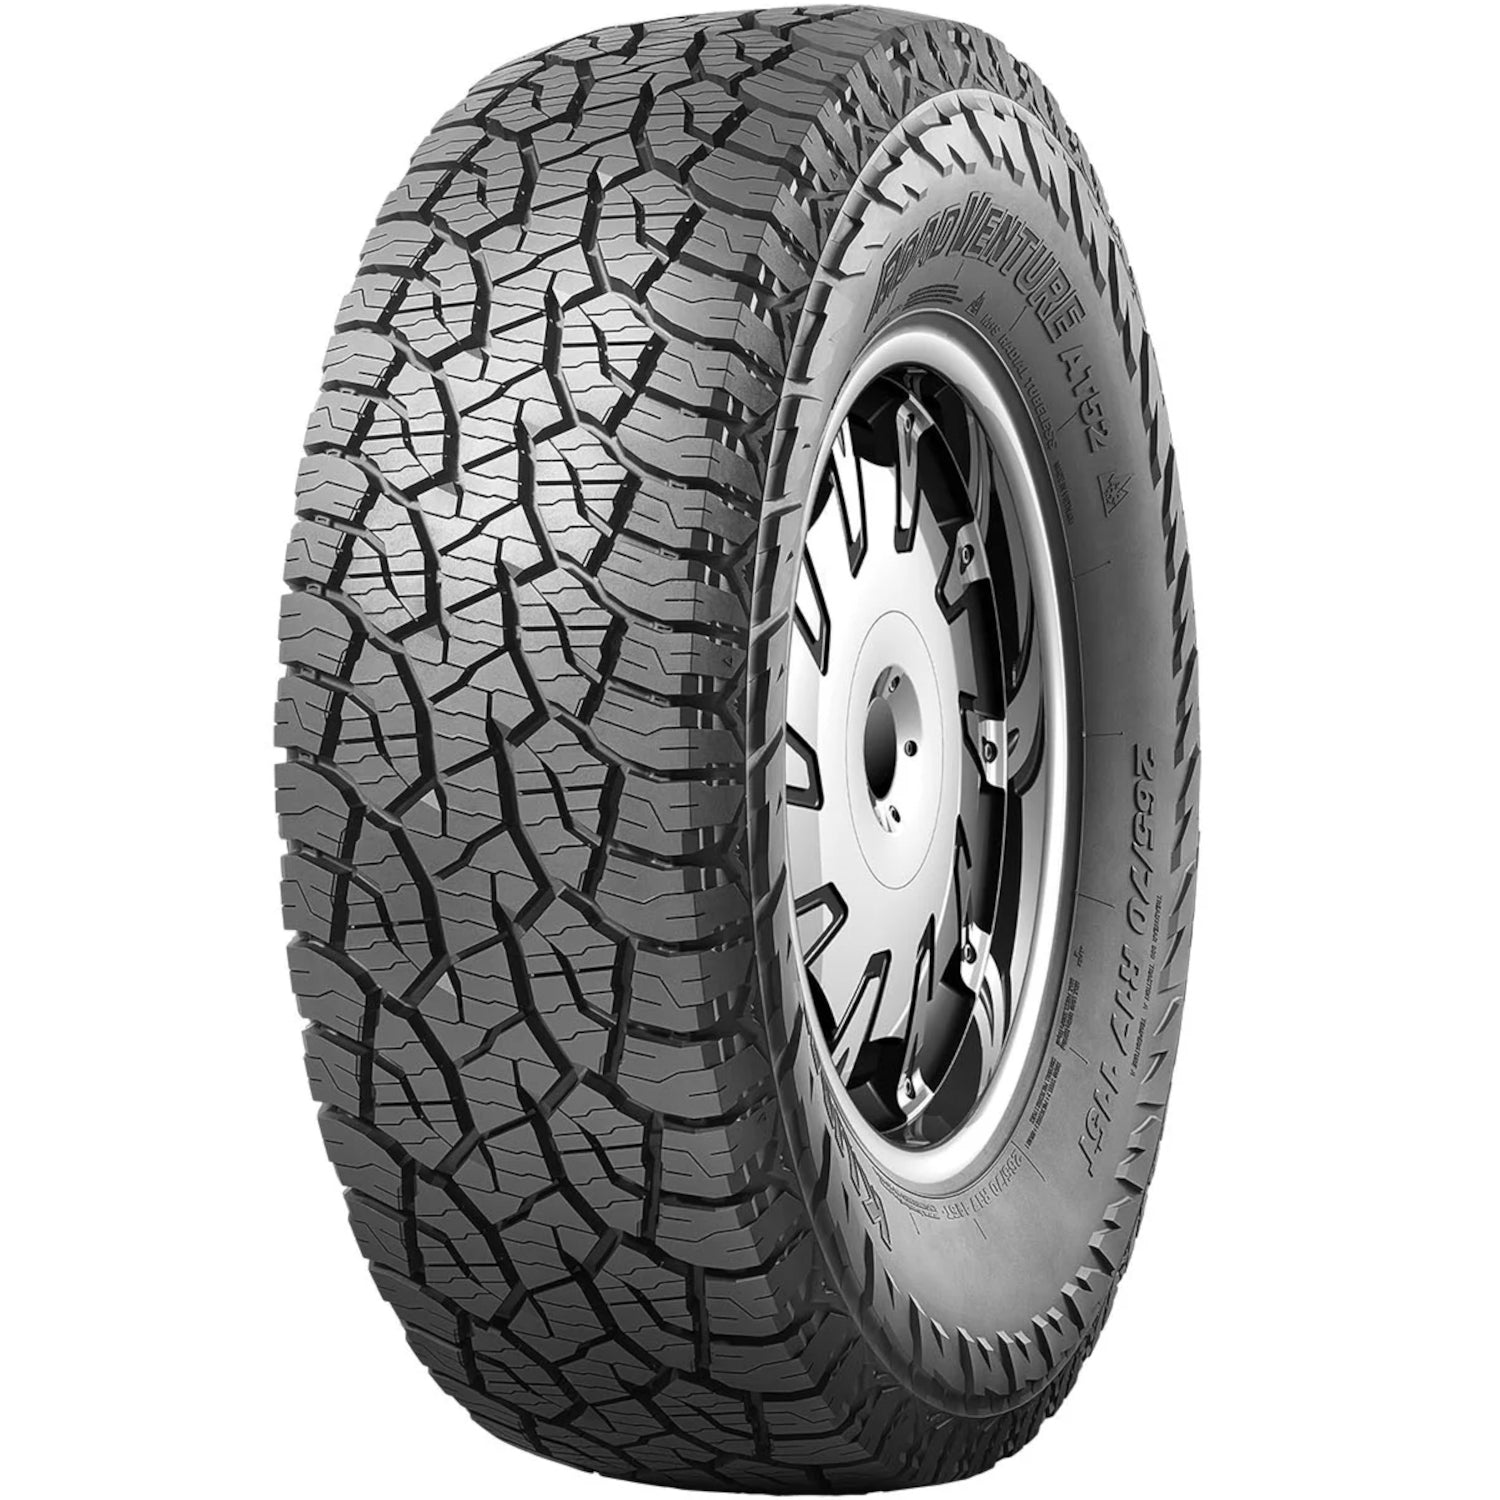 KUMHO ROAD VENTURE AT52 LT285/70R17 (32.8X11.2R 17) Tires